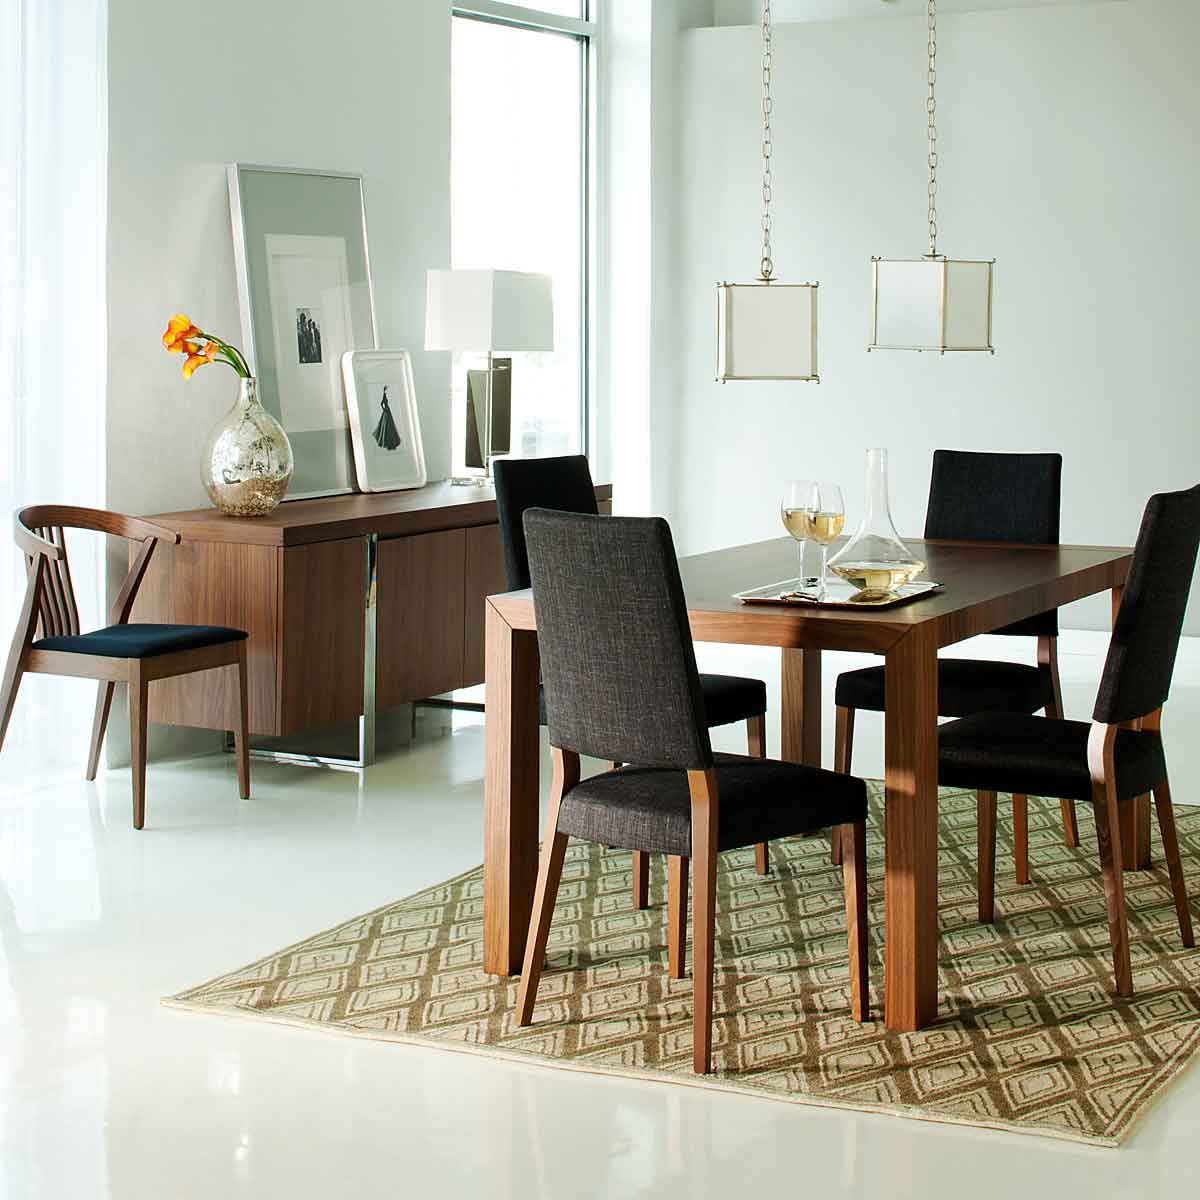 Dinning Room Sets Design Ideas impressive inspiration for modern fresh dining room interior design ideas